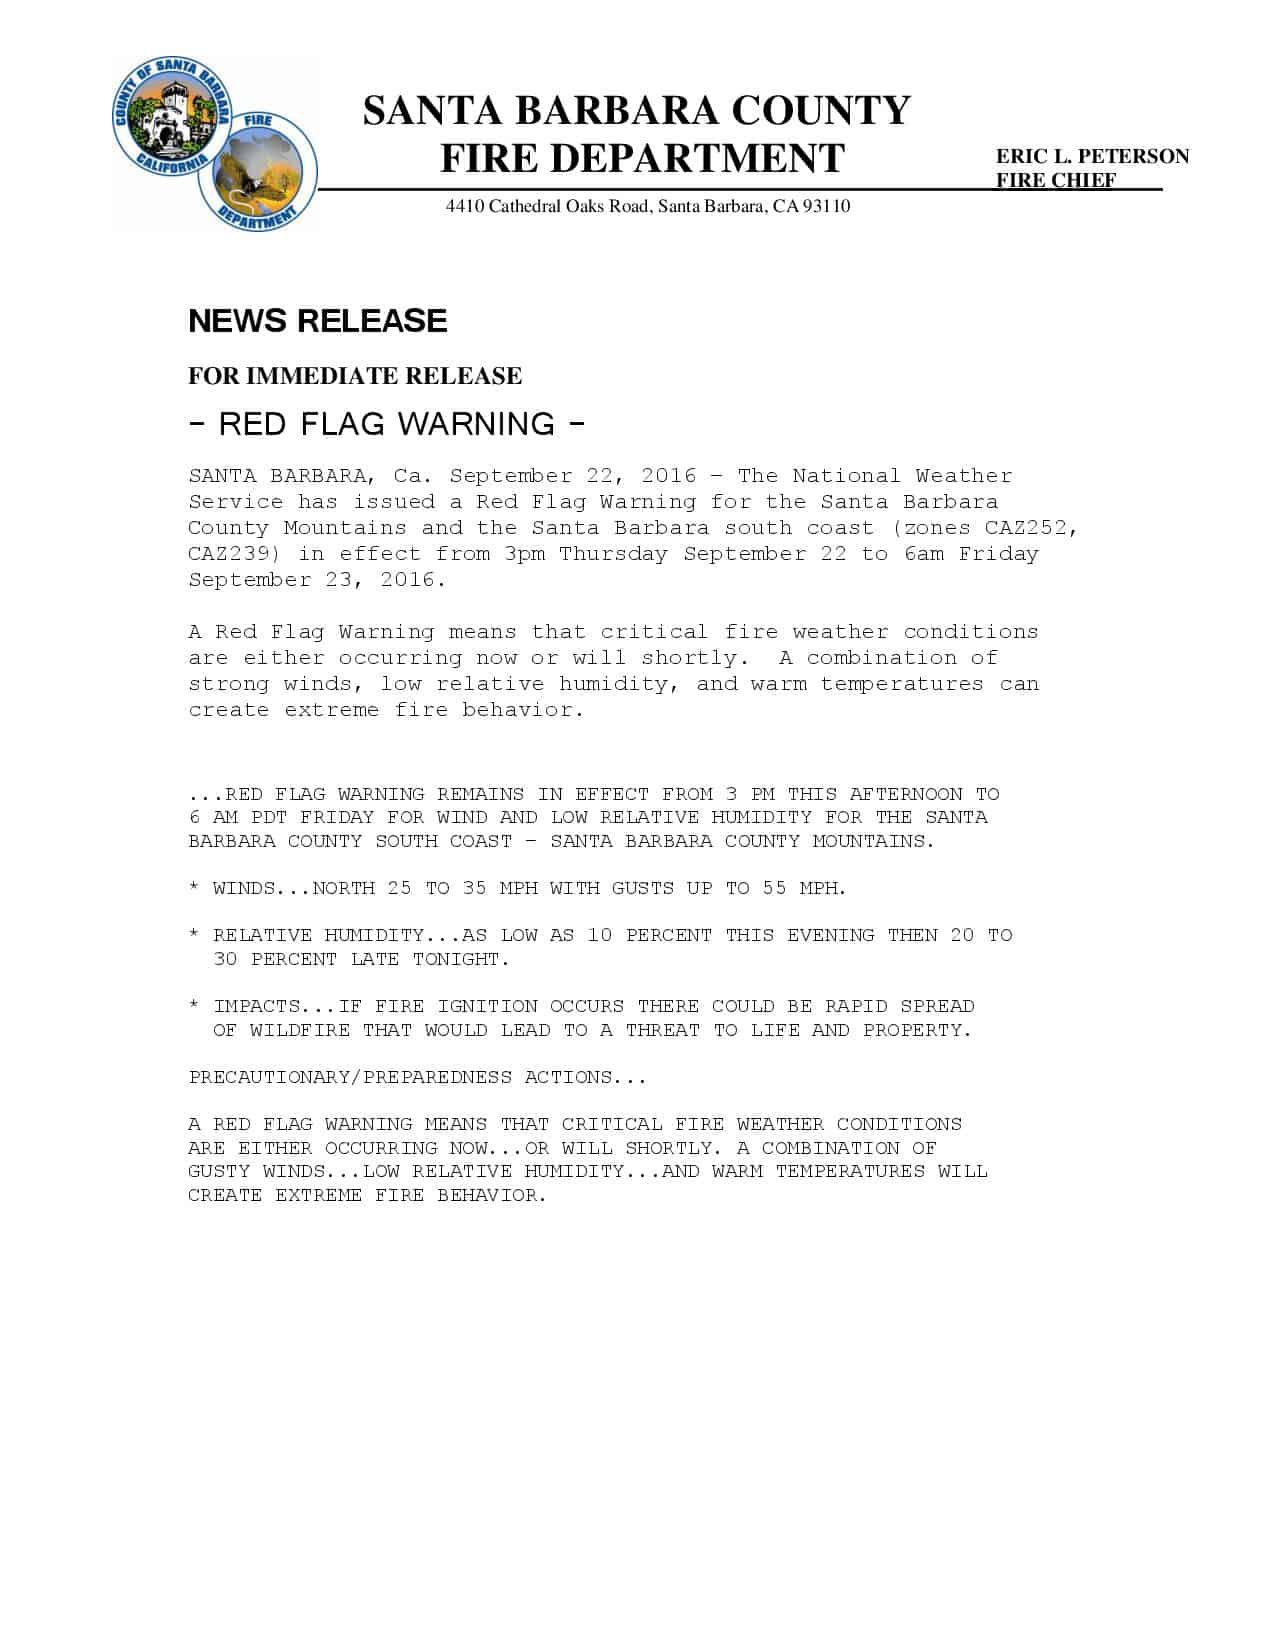 Red Flag Warning